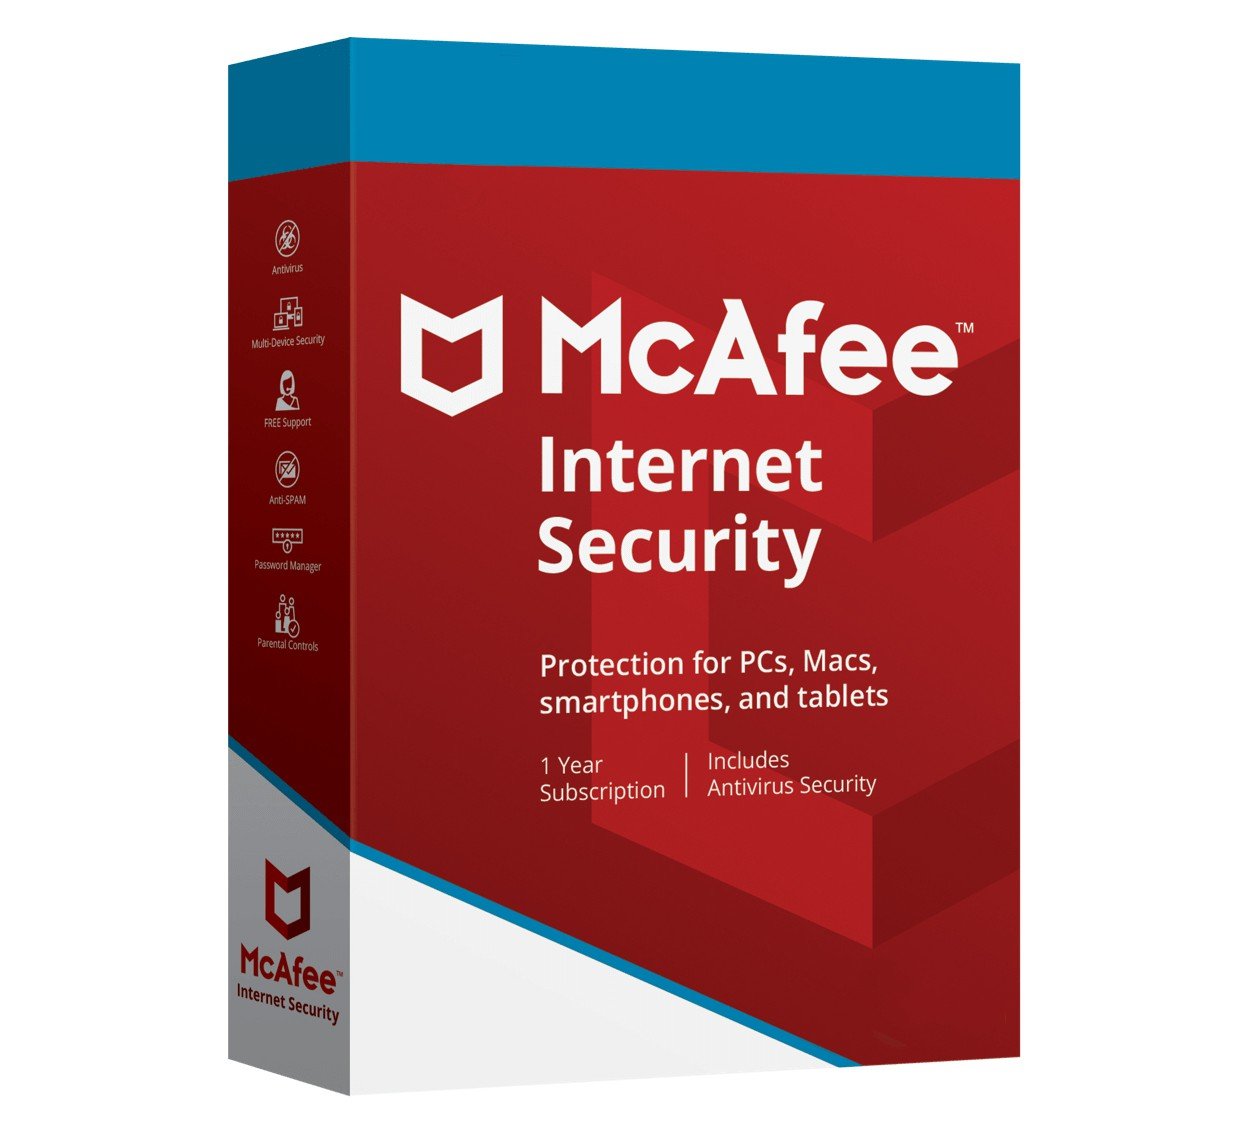 McAfee-Internet-Security